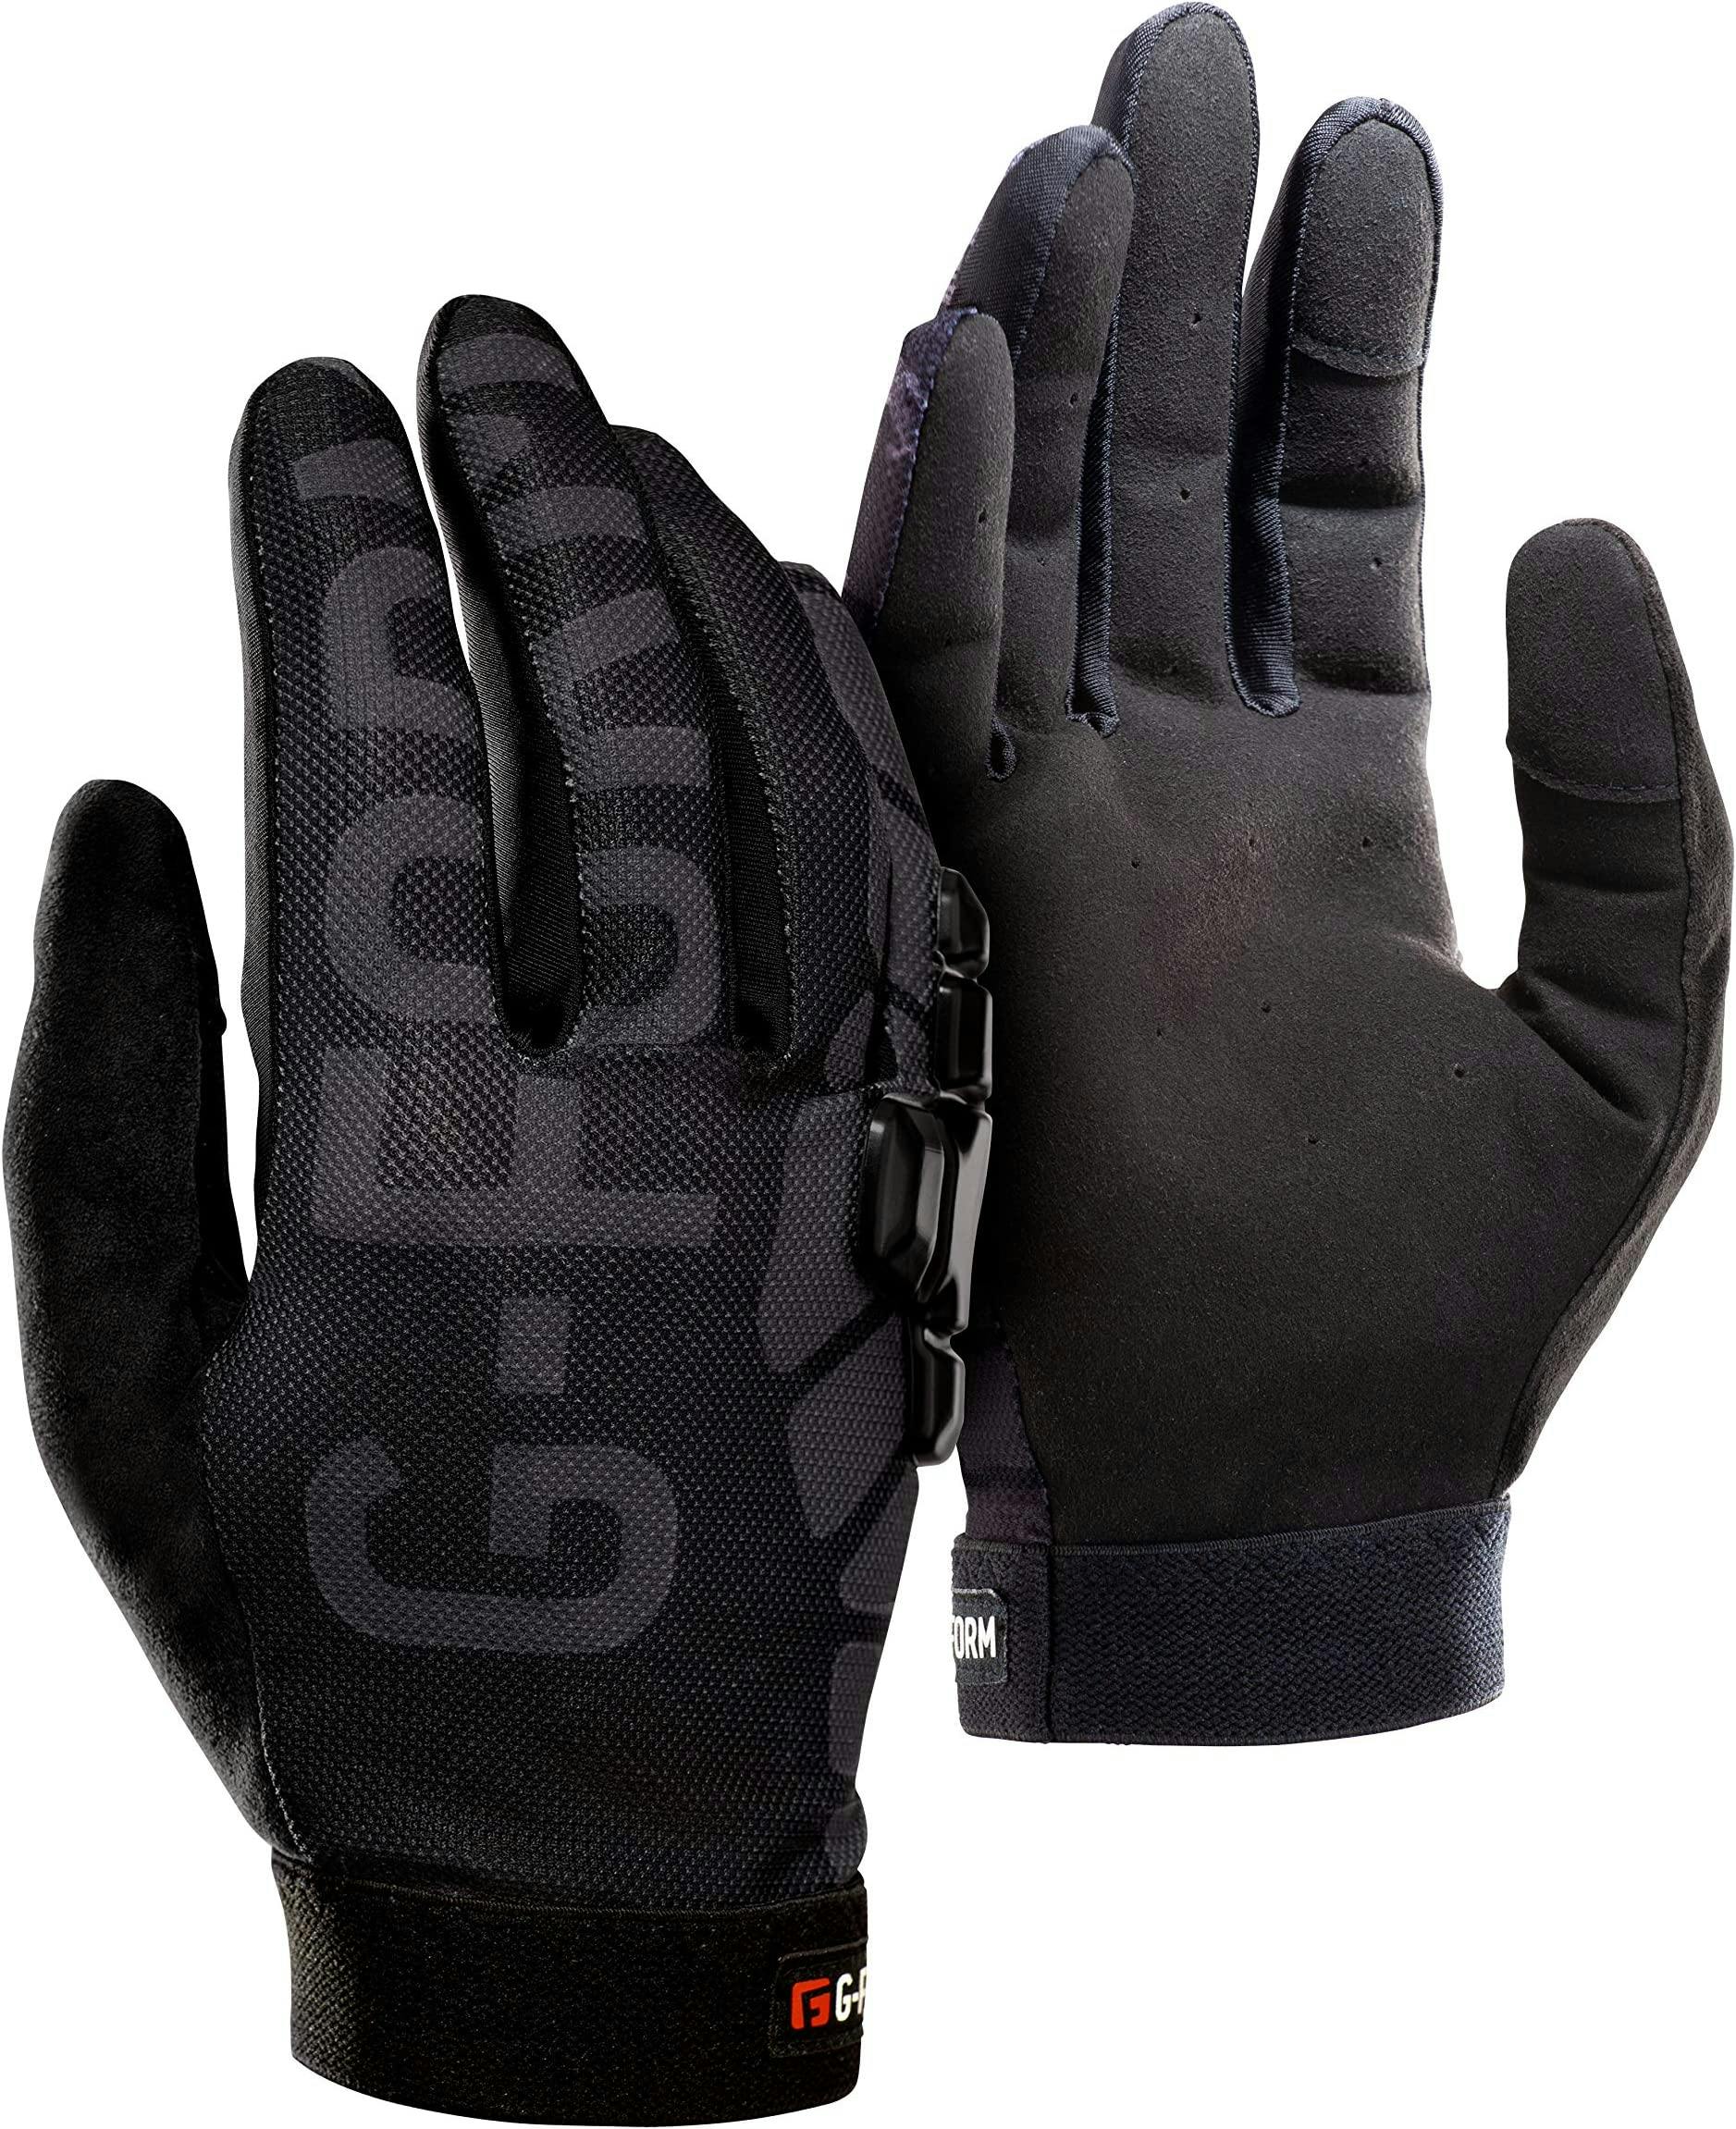 G-Form G-form Sorata Trail Gloves XX-large Black/grey